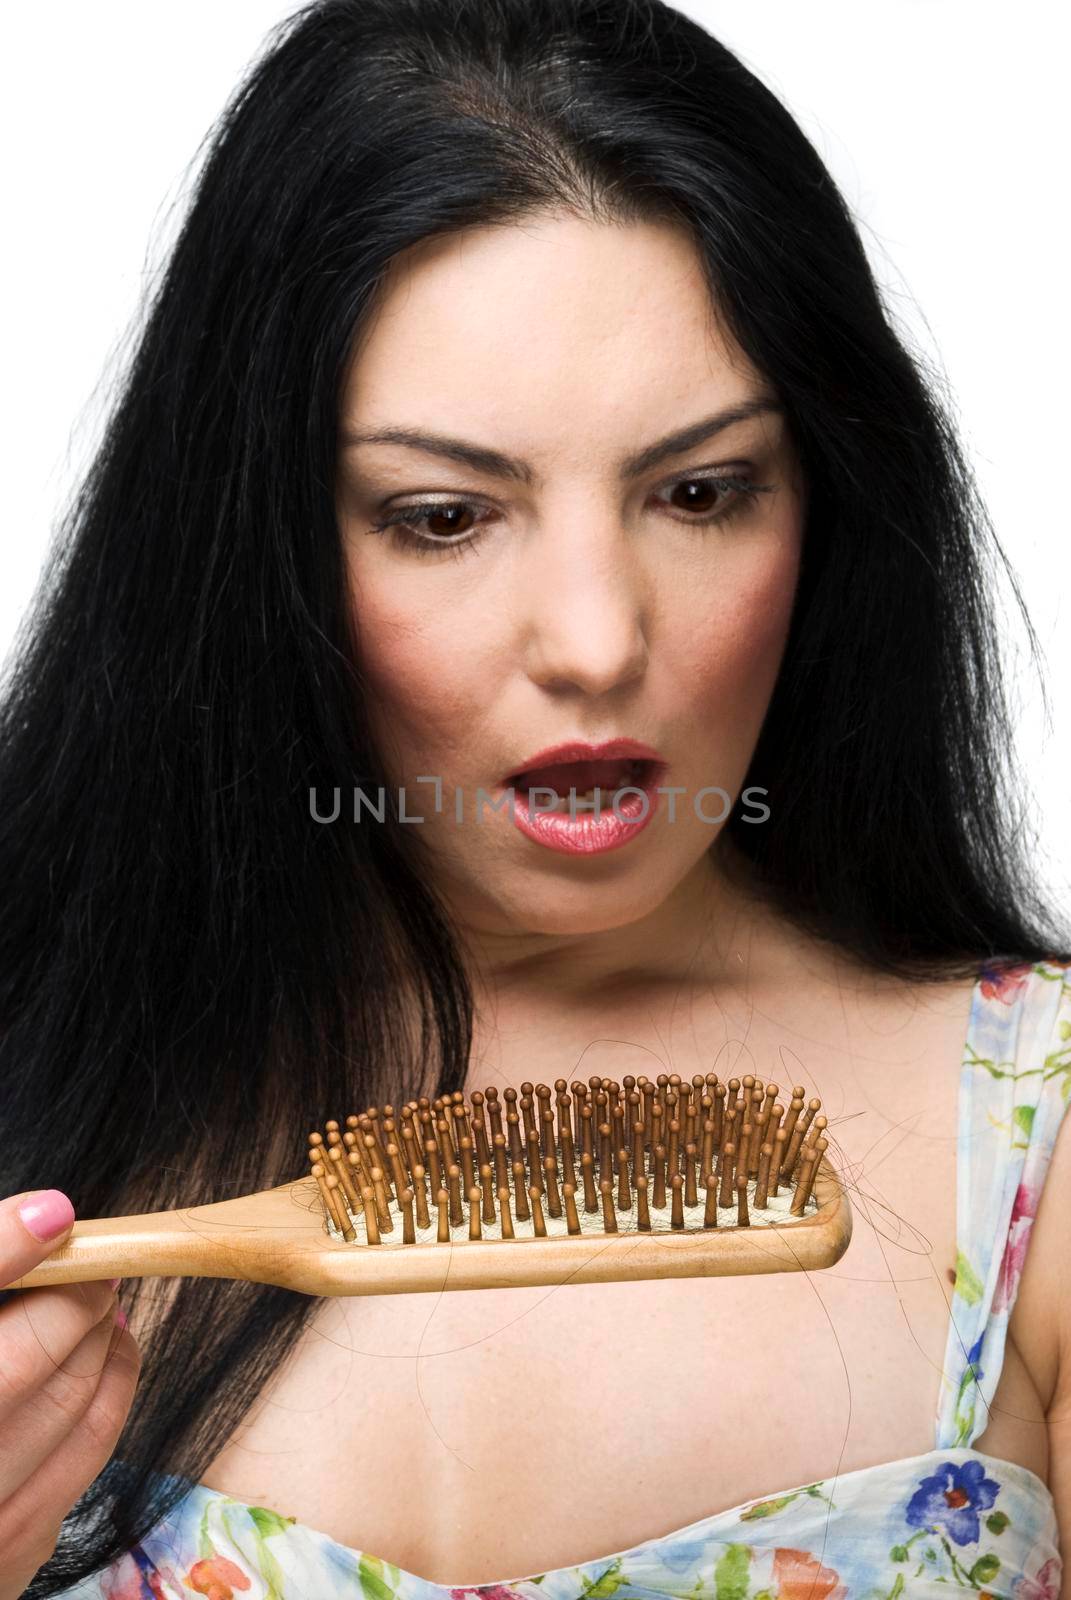 Shocked woman loss hair on hairbrush by justmeyo